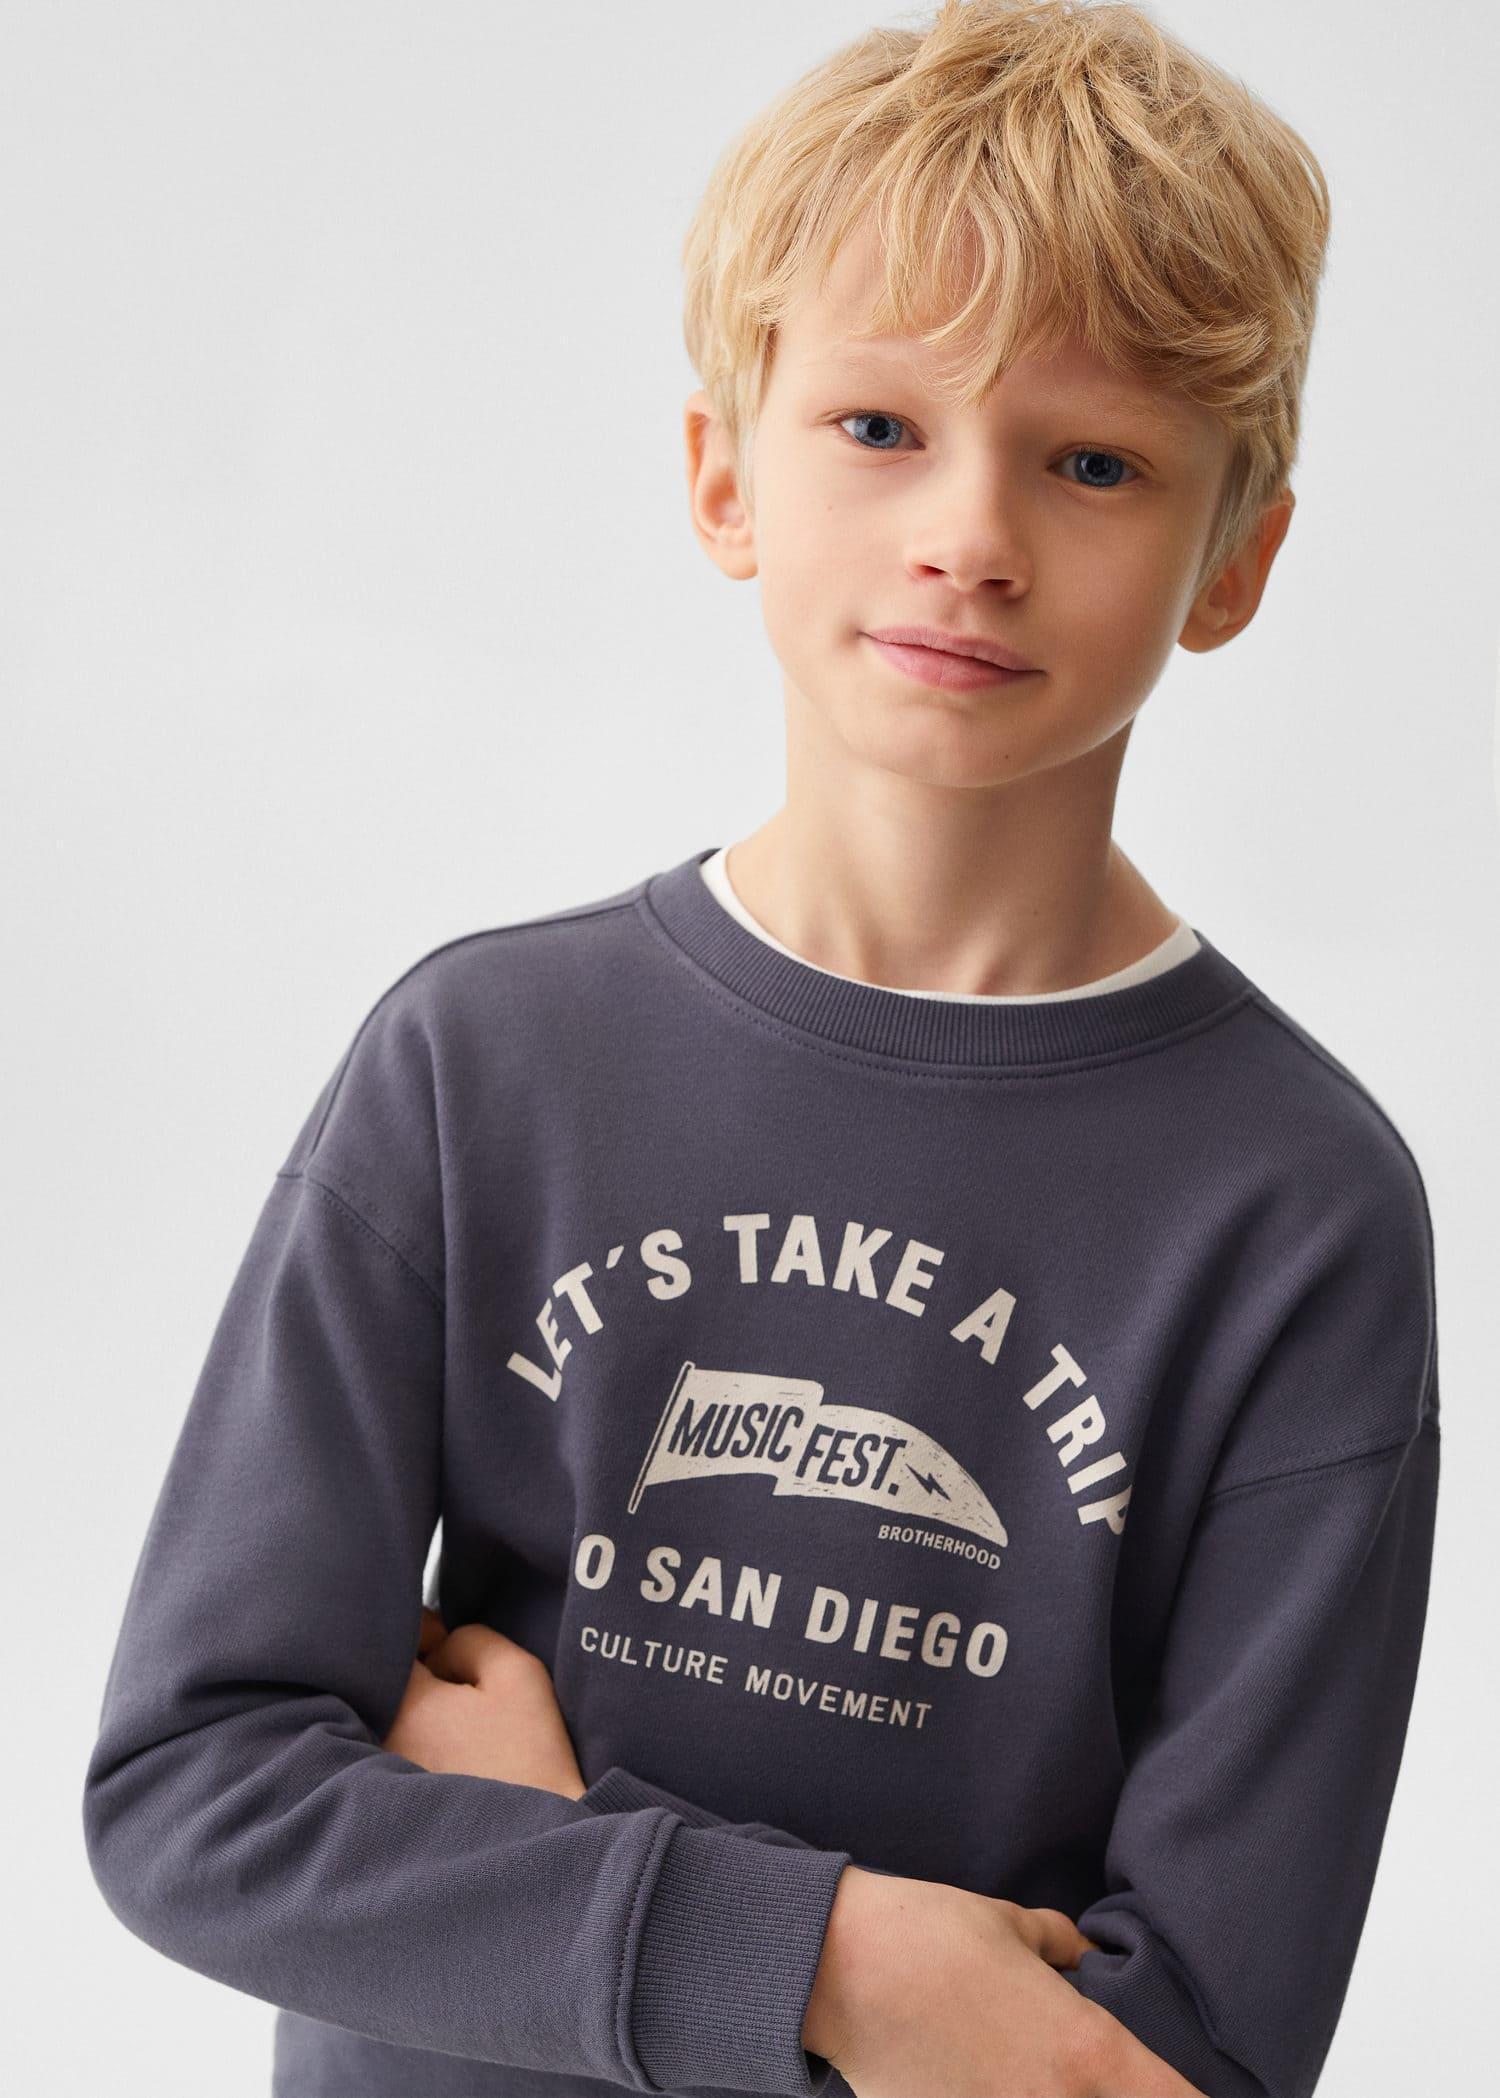 Mango - Grey Message Cotton Sweatshirt, Kids Boys